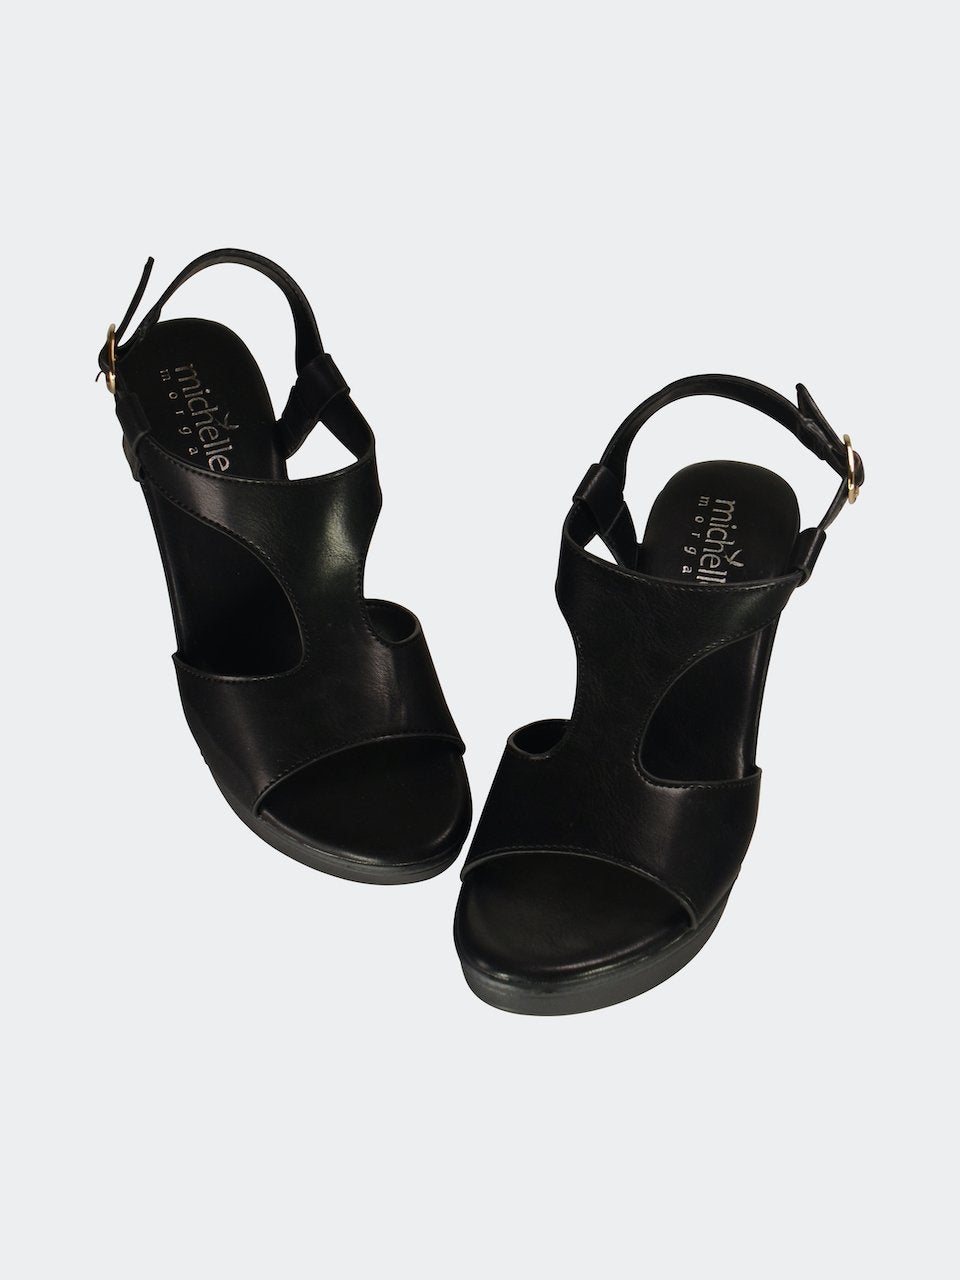 Michelle Morgan 914RJY72 Women's Heeled Sandals #color_Black